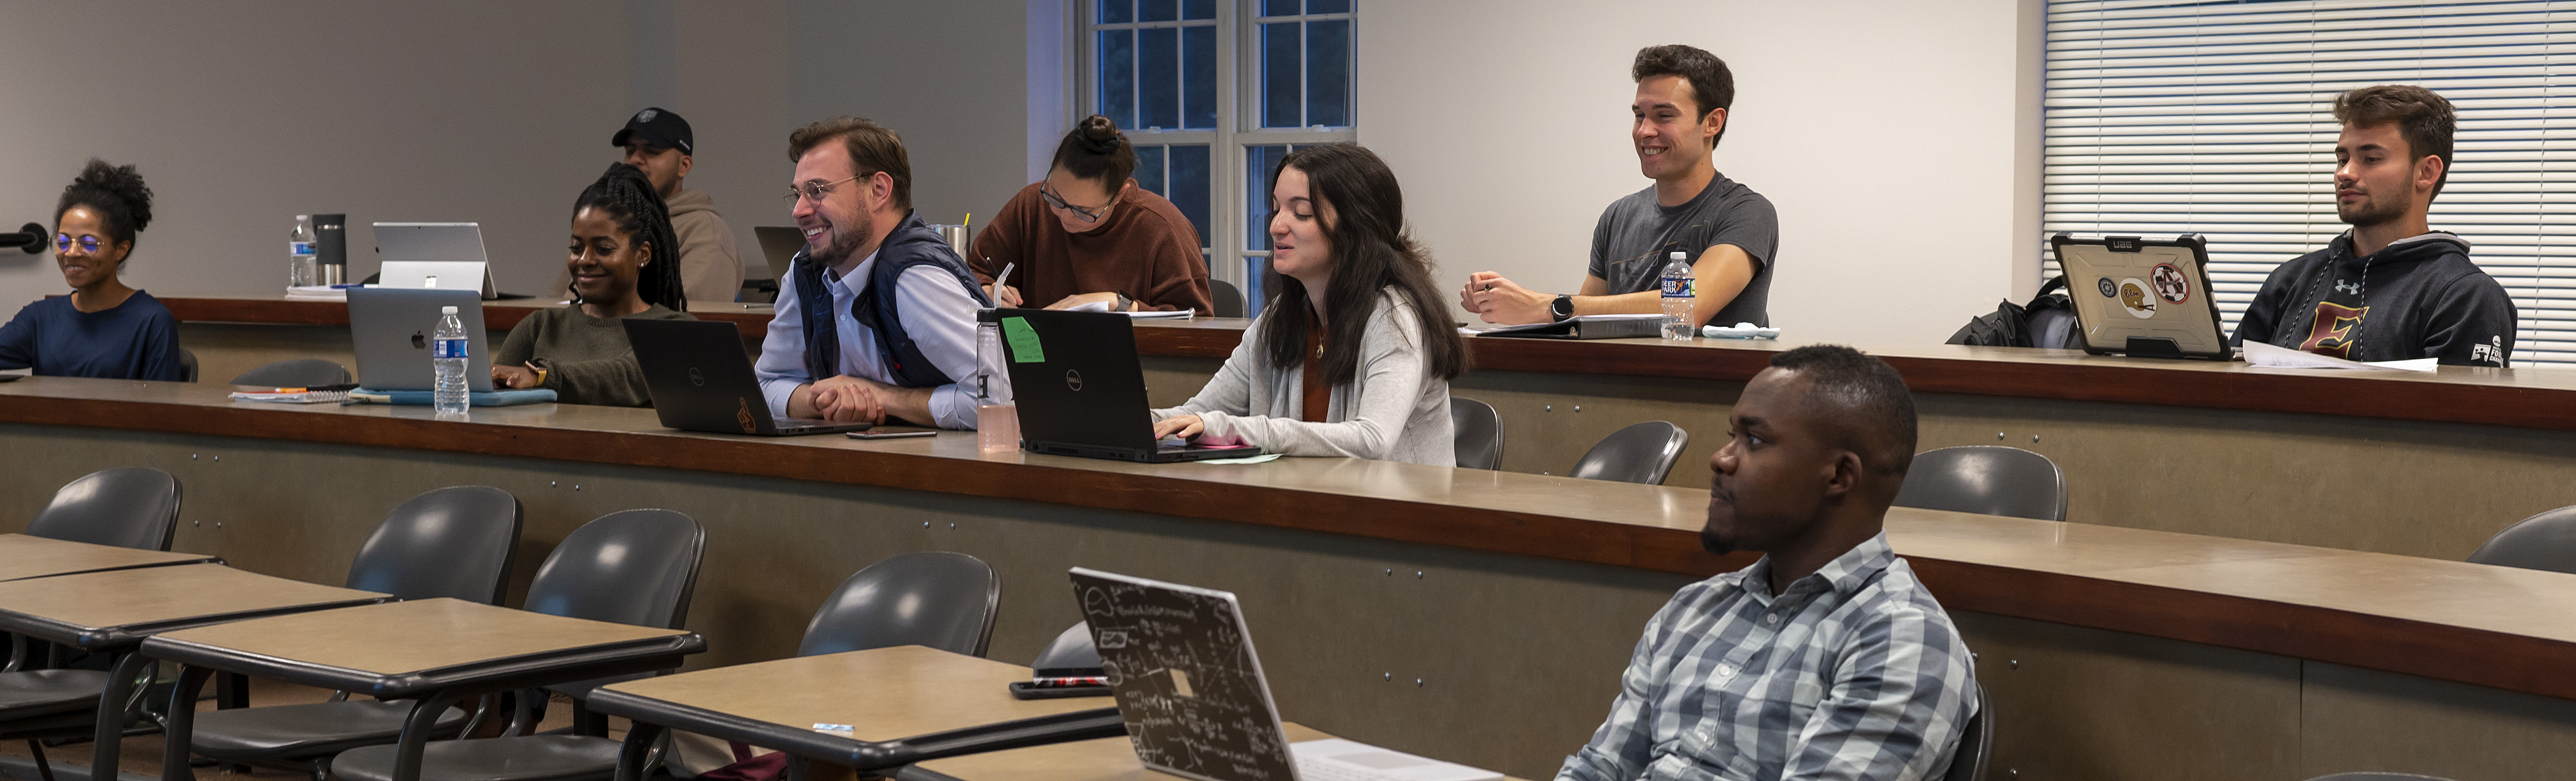 Elon business graduate students in a business school classroom